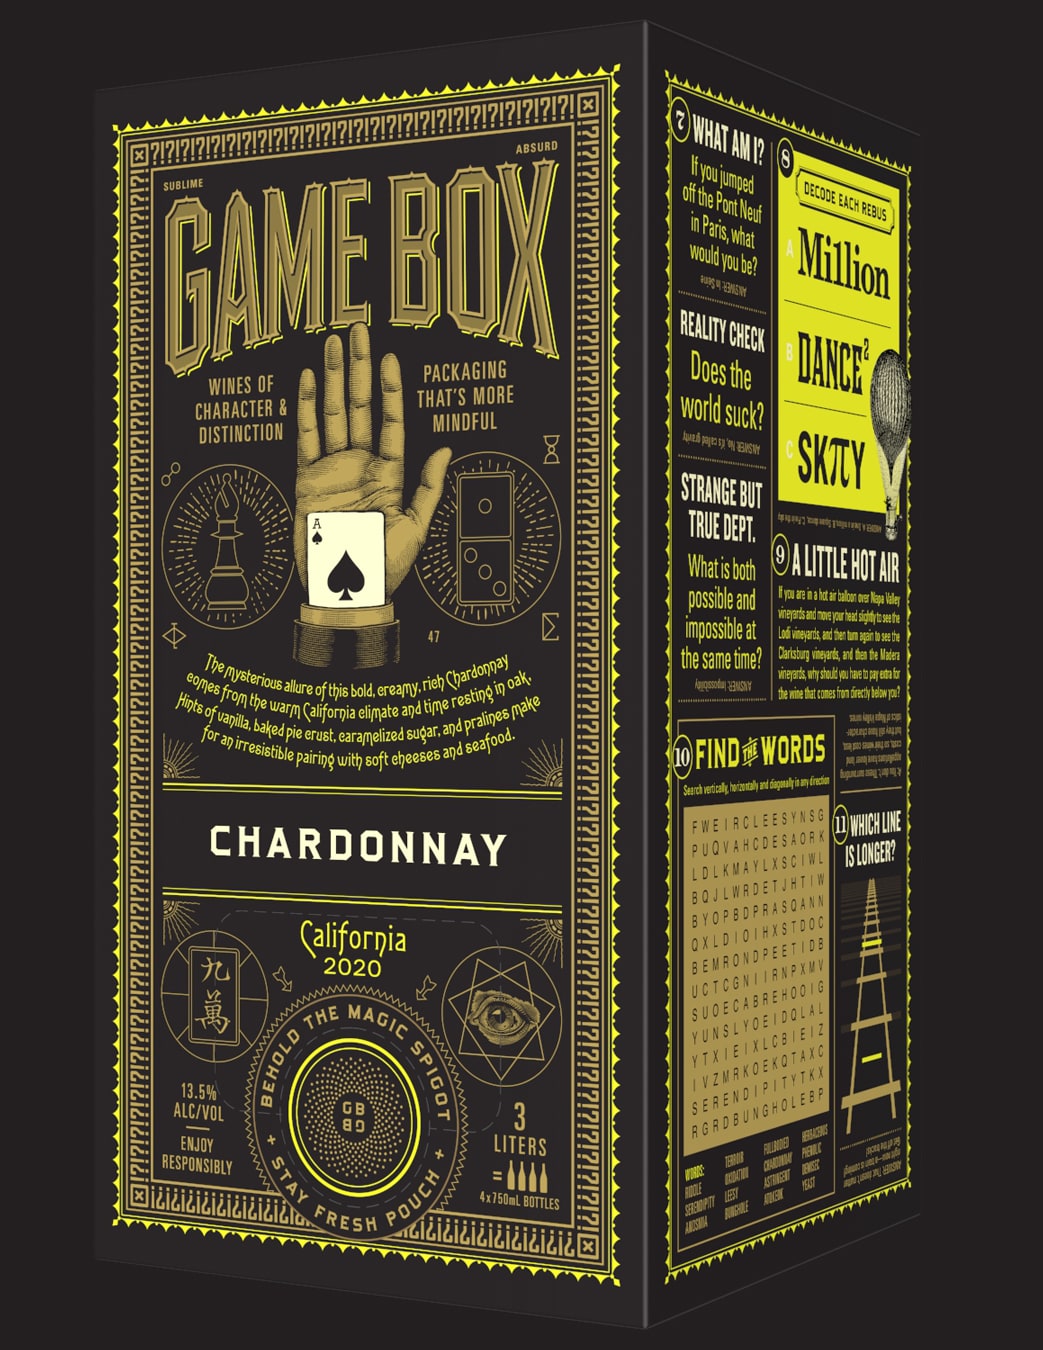 Game Box Wines Chardonnay side panel design detail